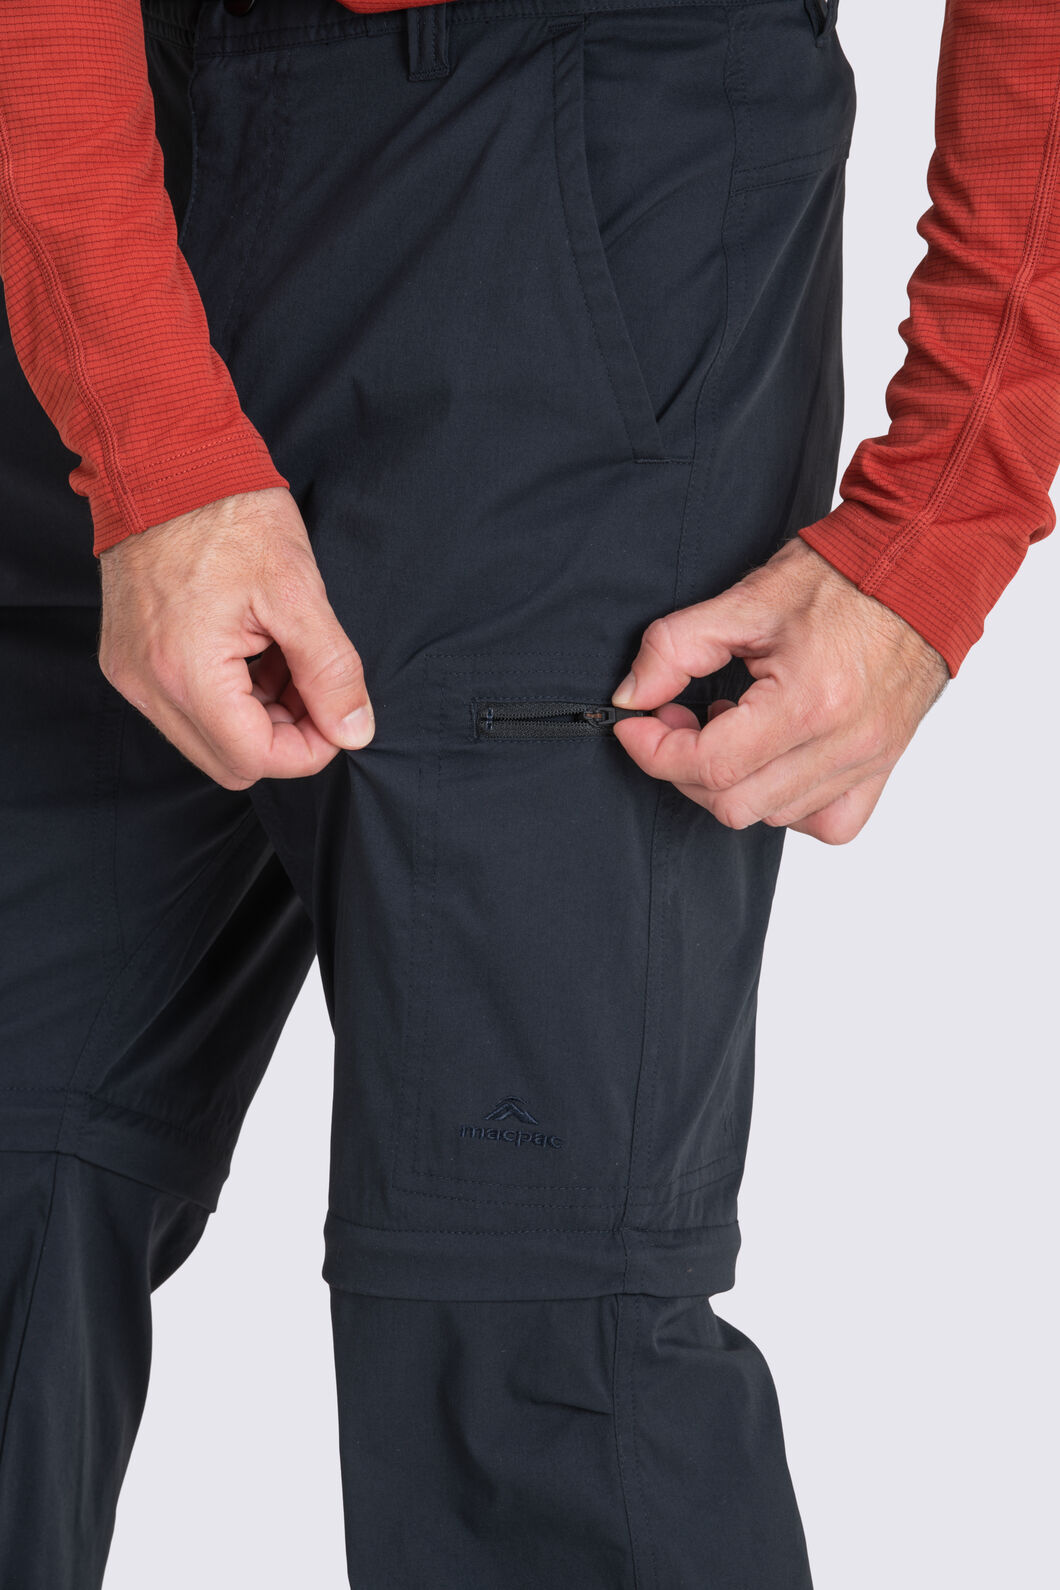 Macpac Rockover Convertible Pants — Men's